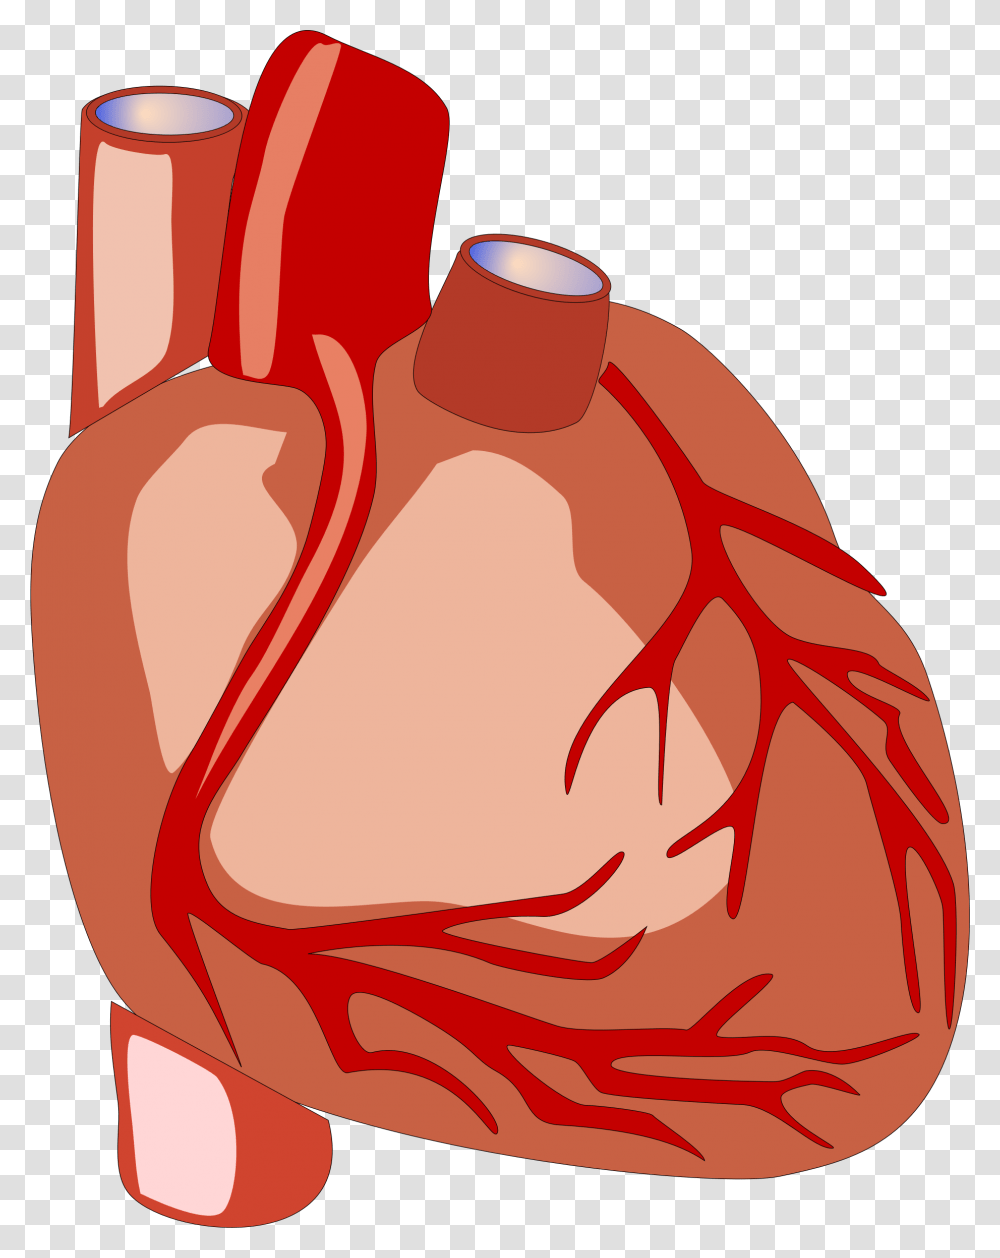 Heart Human Anatomy Human Heart Clipart, Clothing, Apparel, Food, Bag Transparent Png